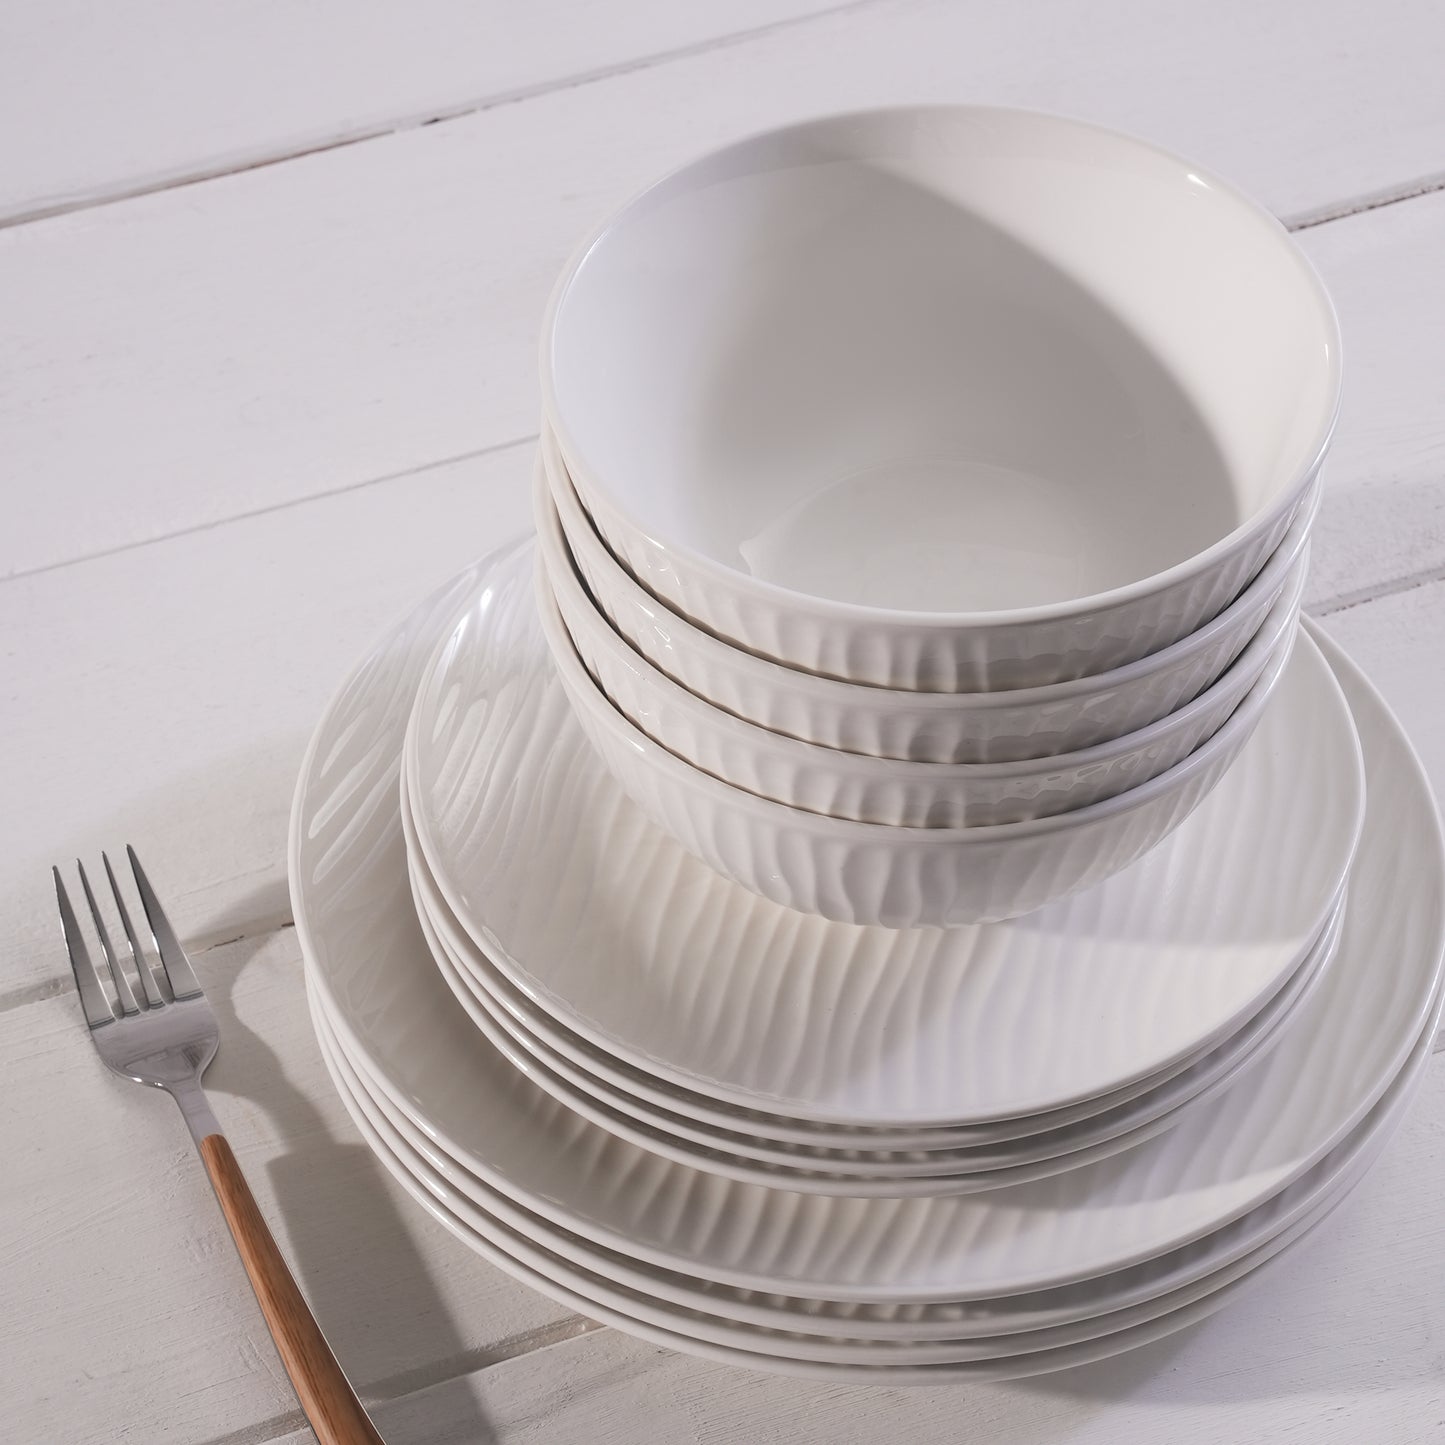 Ripple, 24 Piece Porcelain Dinner Set for 6 People, White